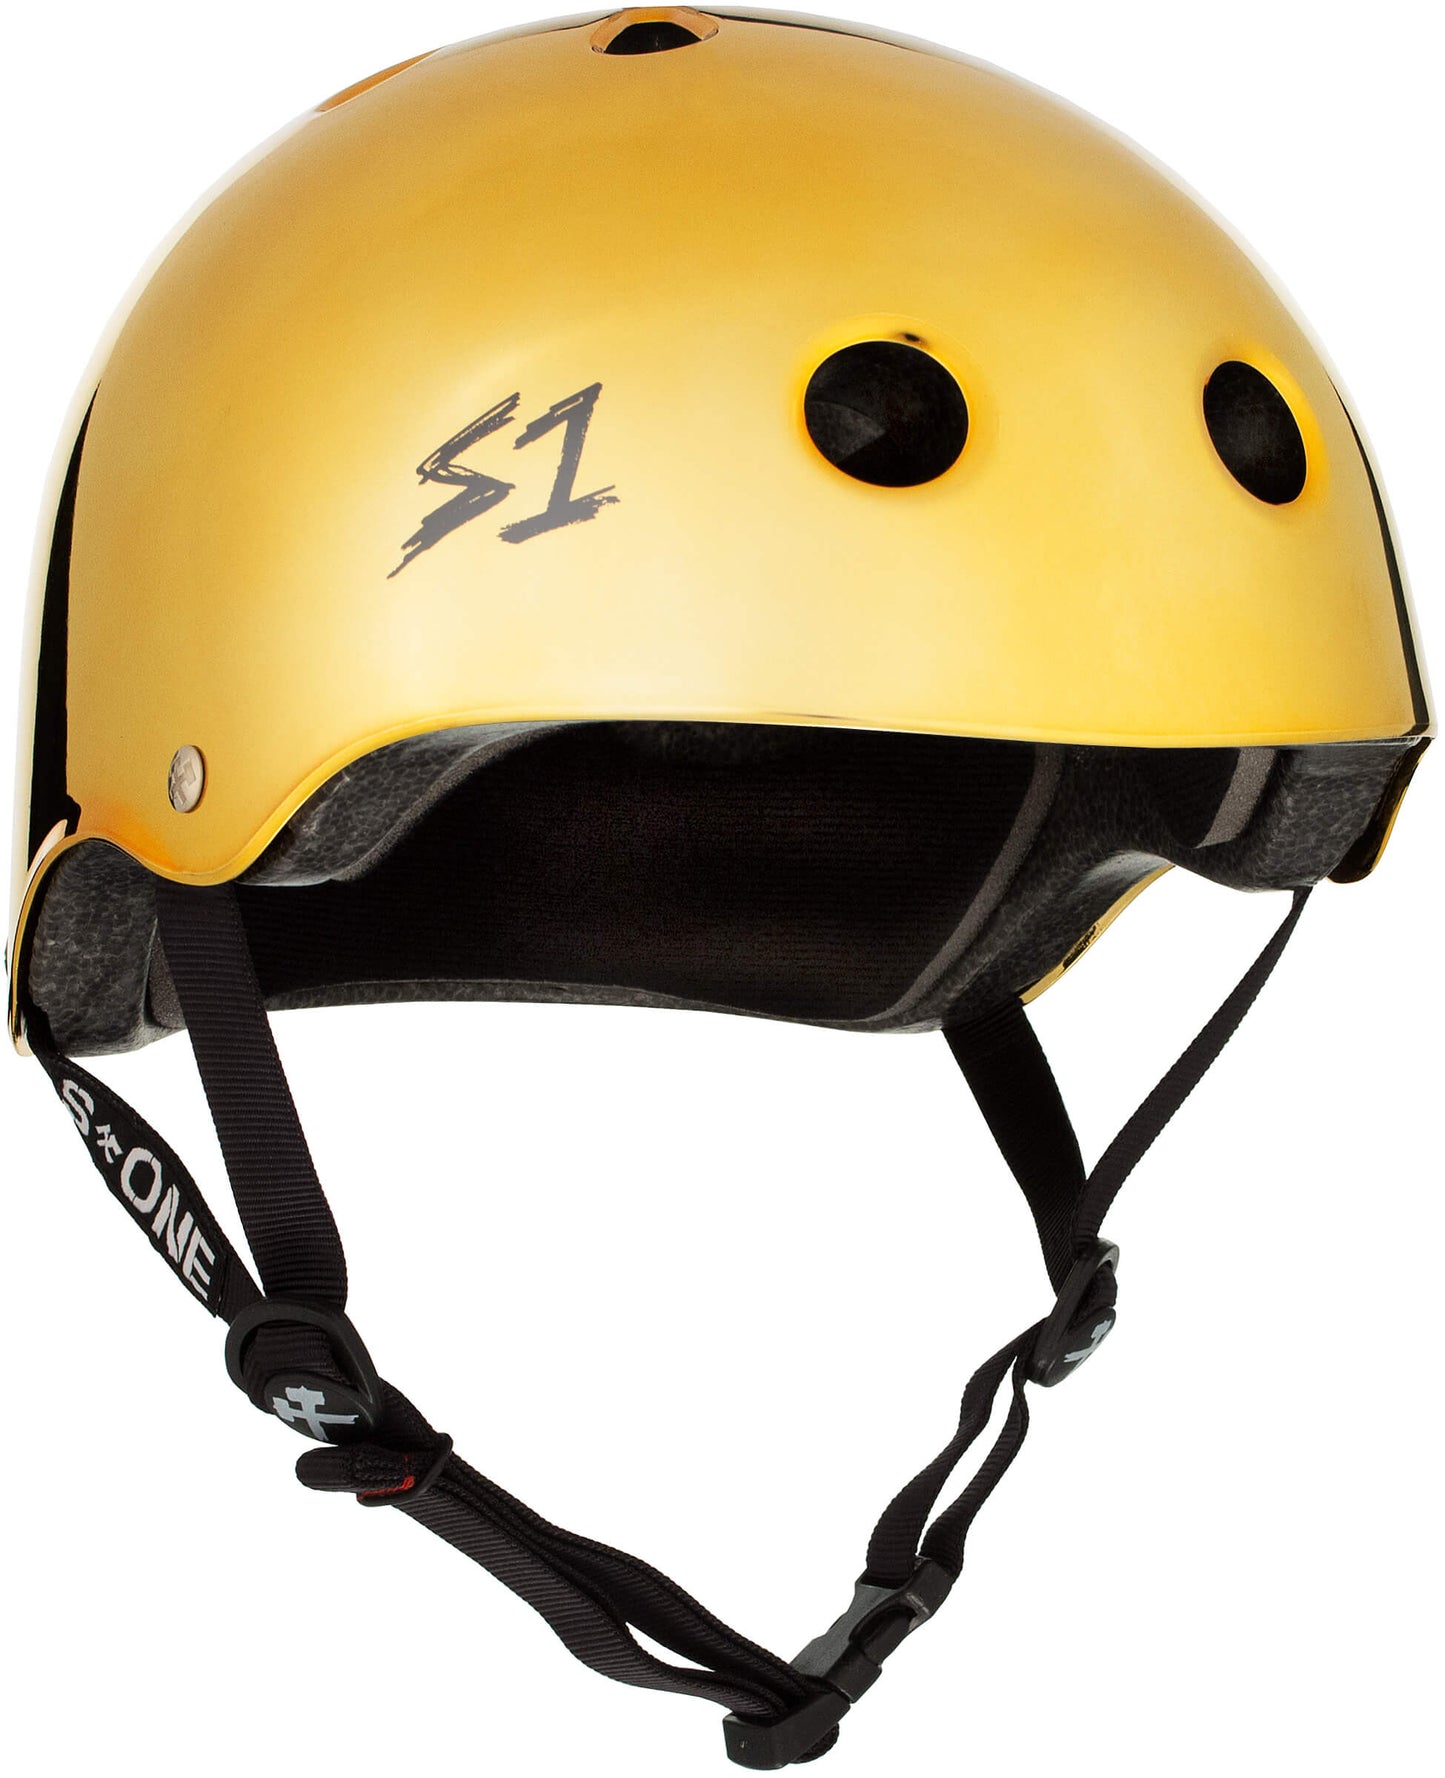 S1 Lifer Helmet – Gold Mirror Gloss